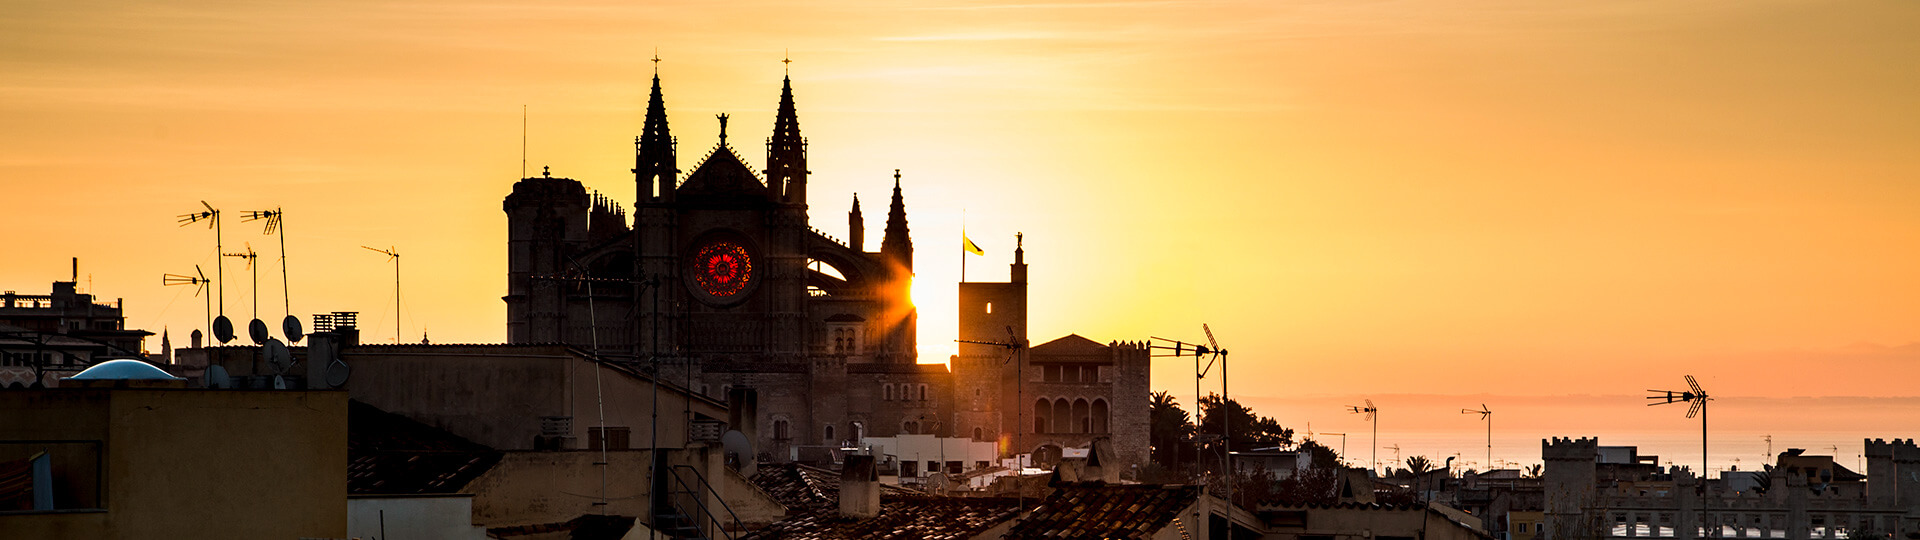 Cathedral of Palma de Mallorca at sunset